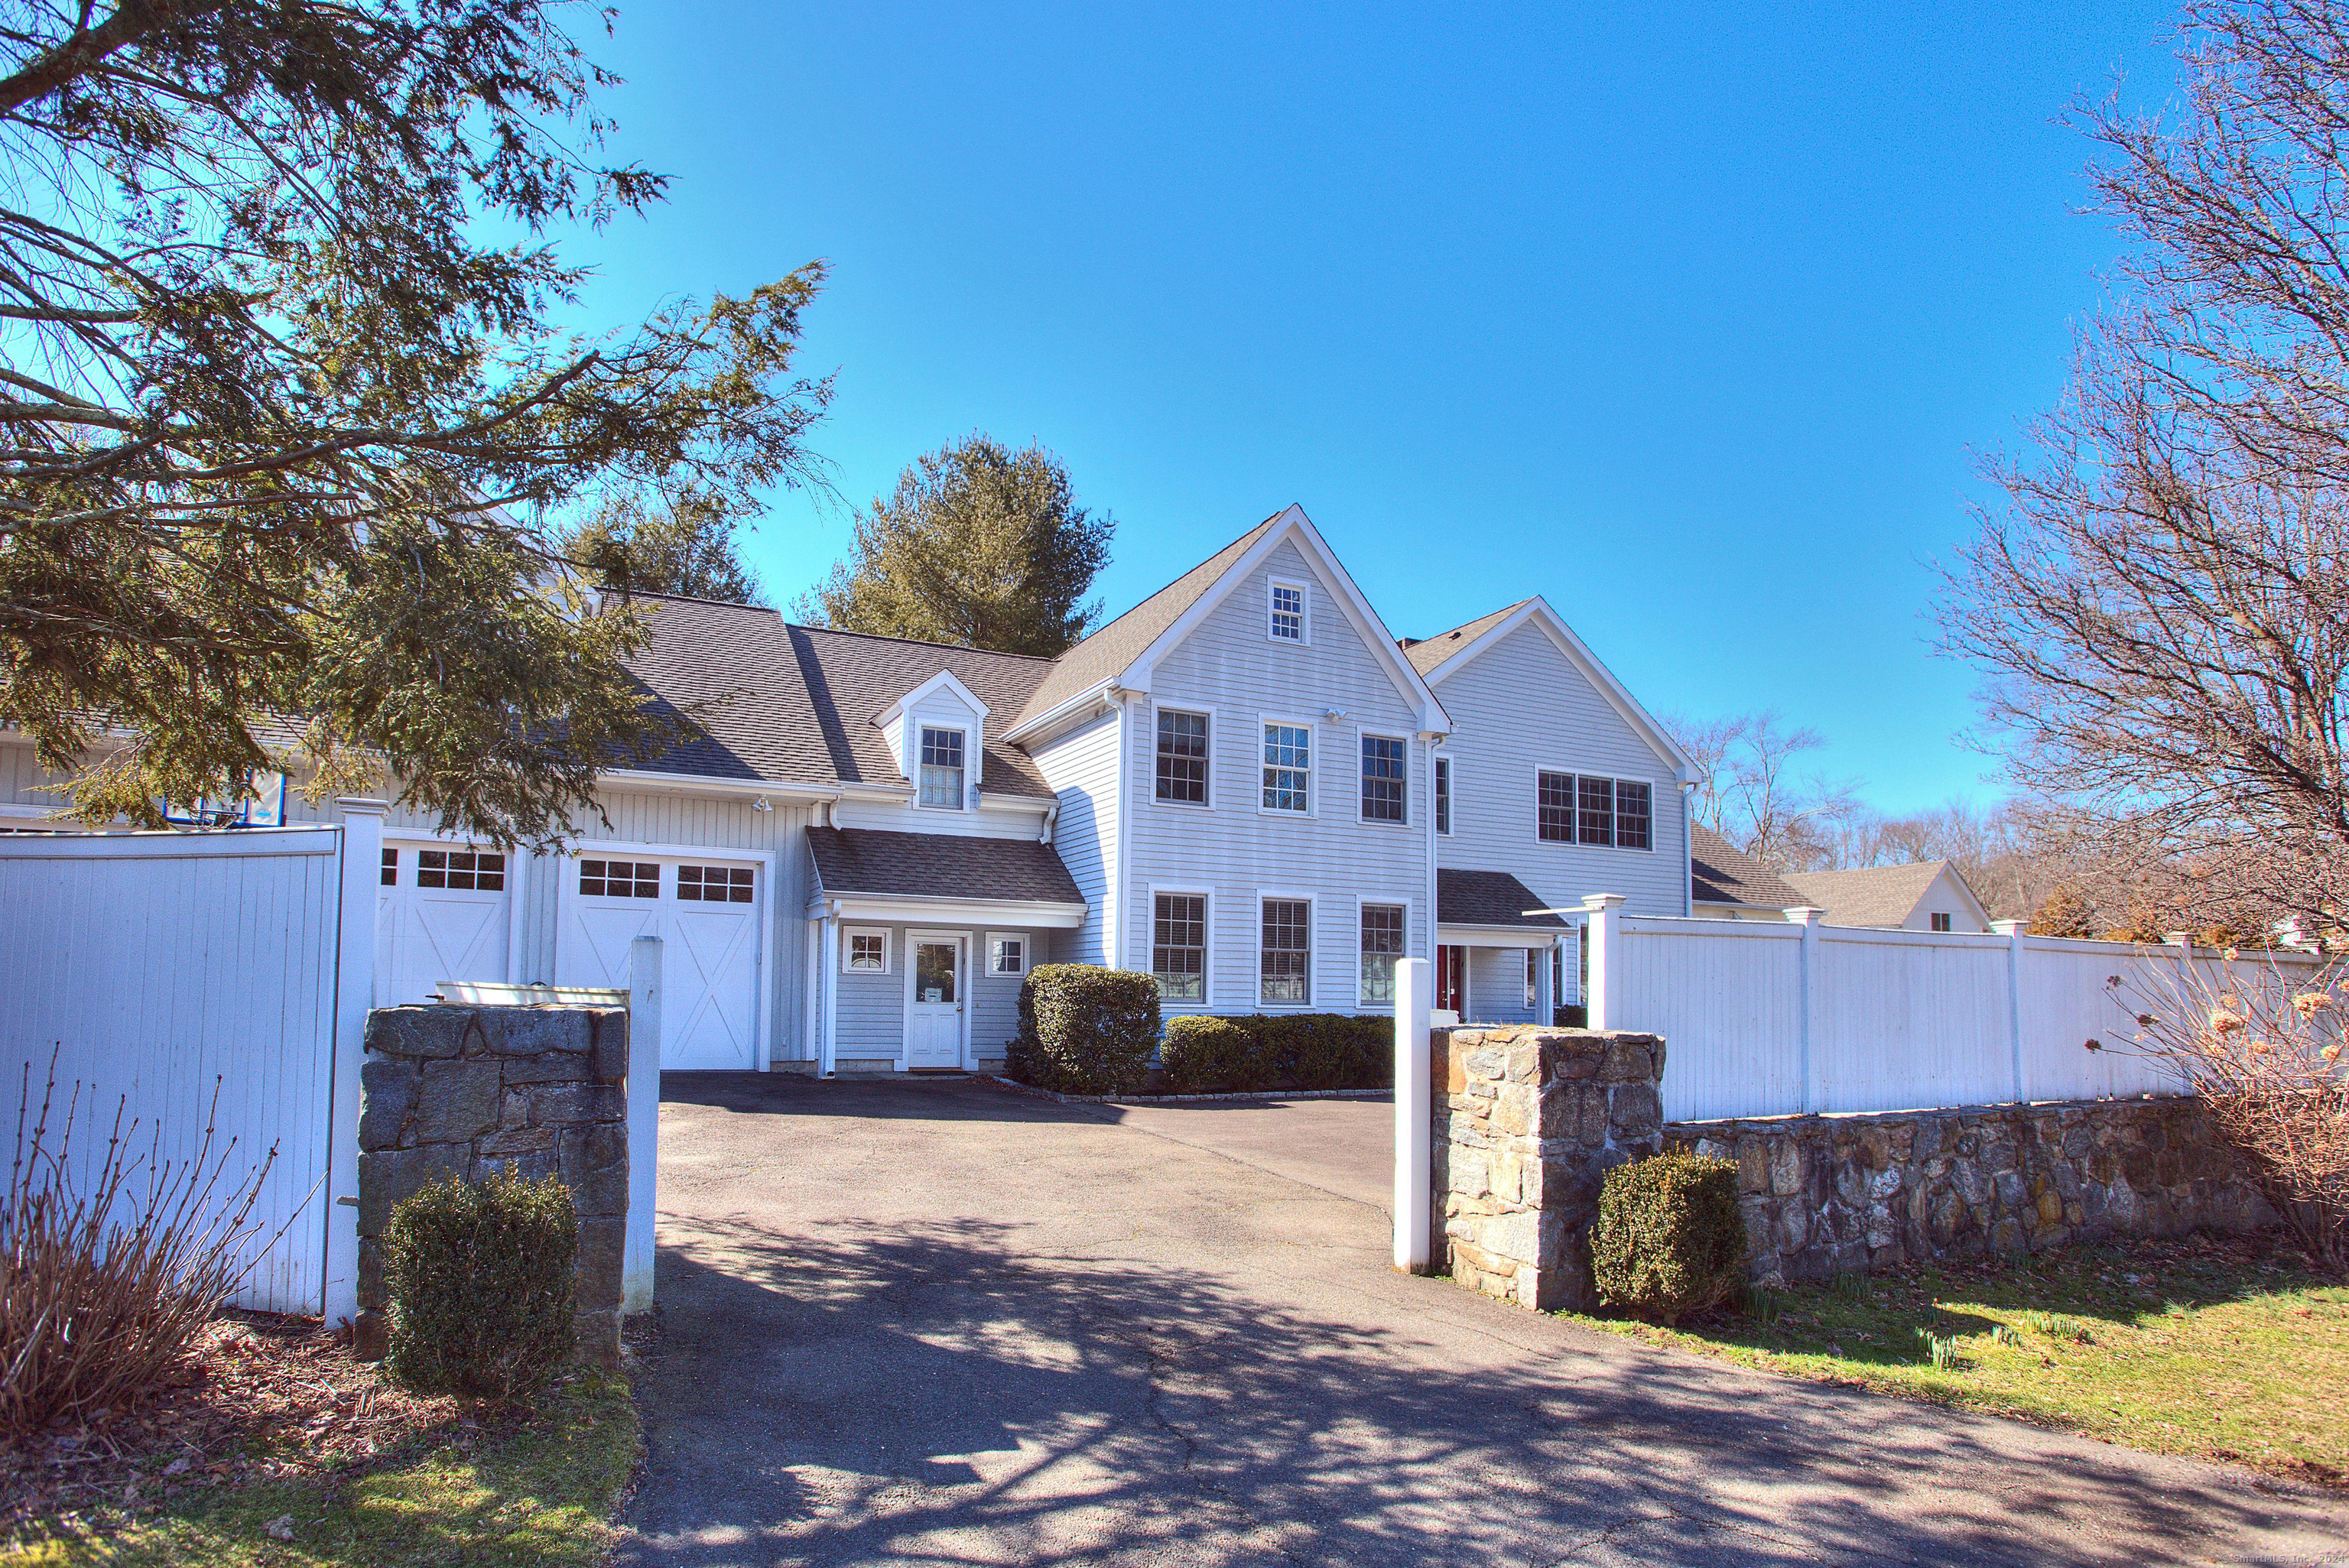 Rental Property at 1 Vineyard Lane, Westport, Connecticut - Bedrooms: 4 
Bathrooms: 6 
Rooms: 11  - $25,000 MO.